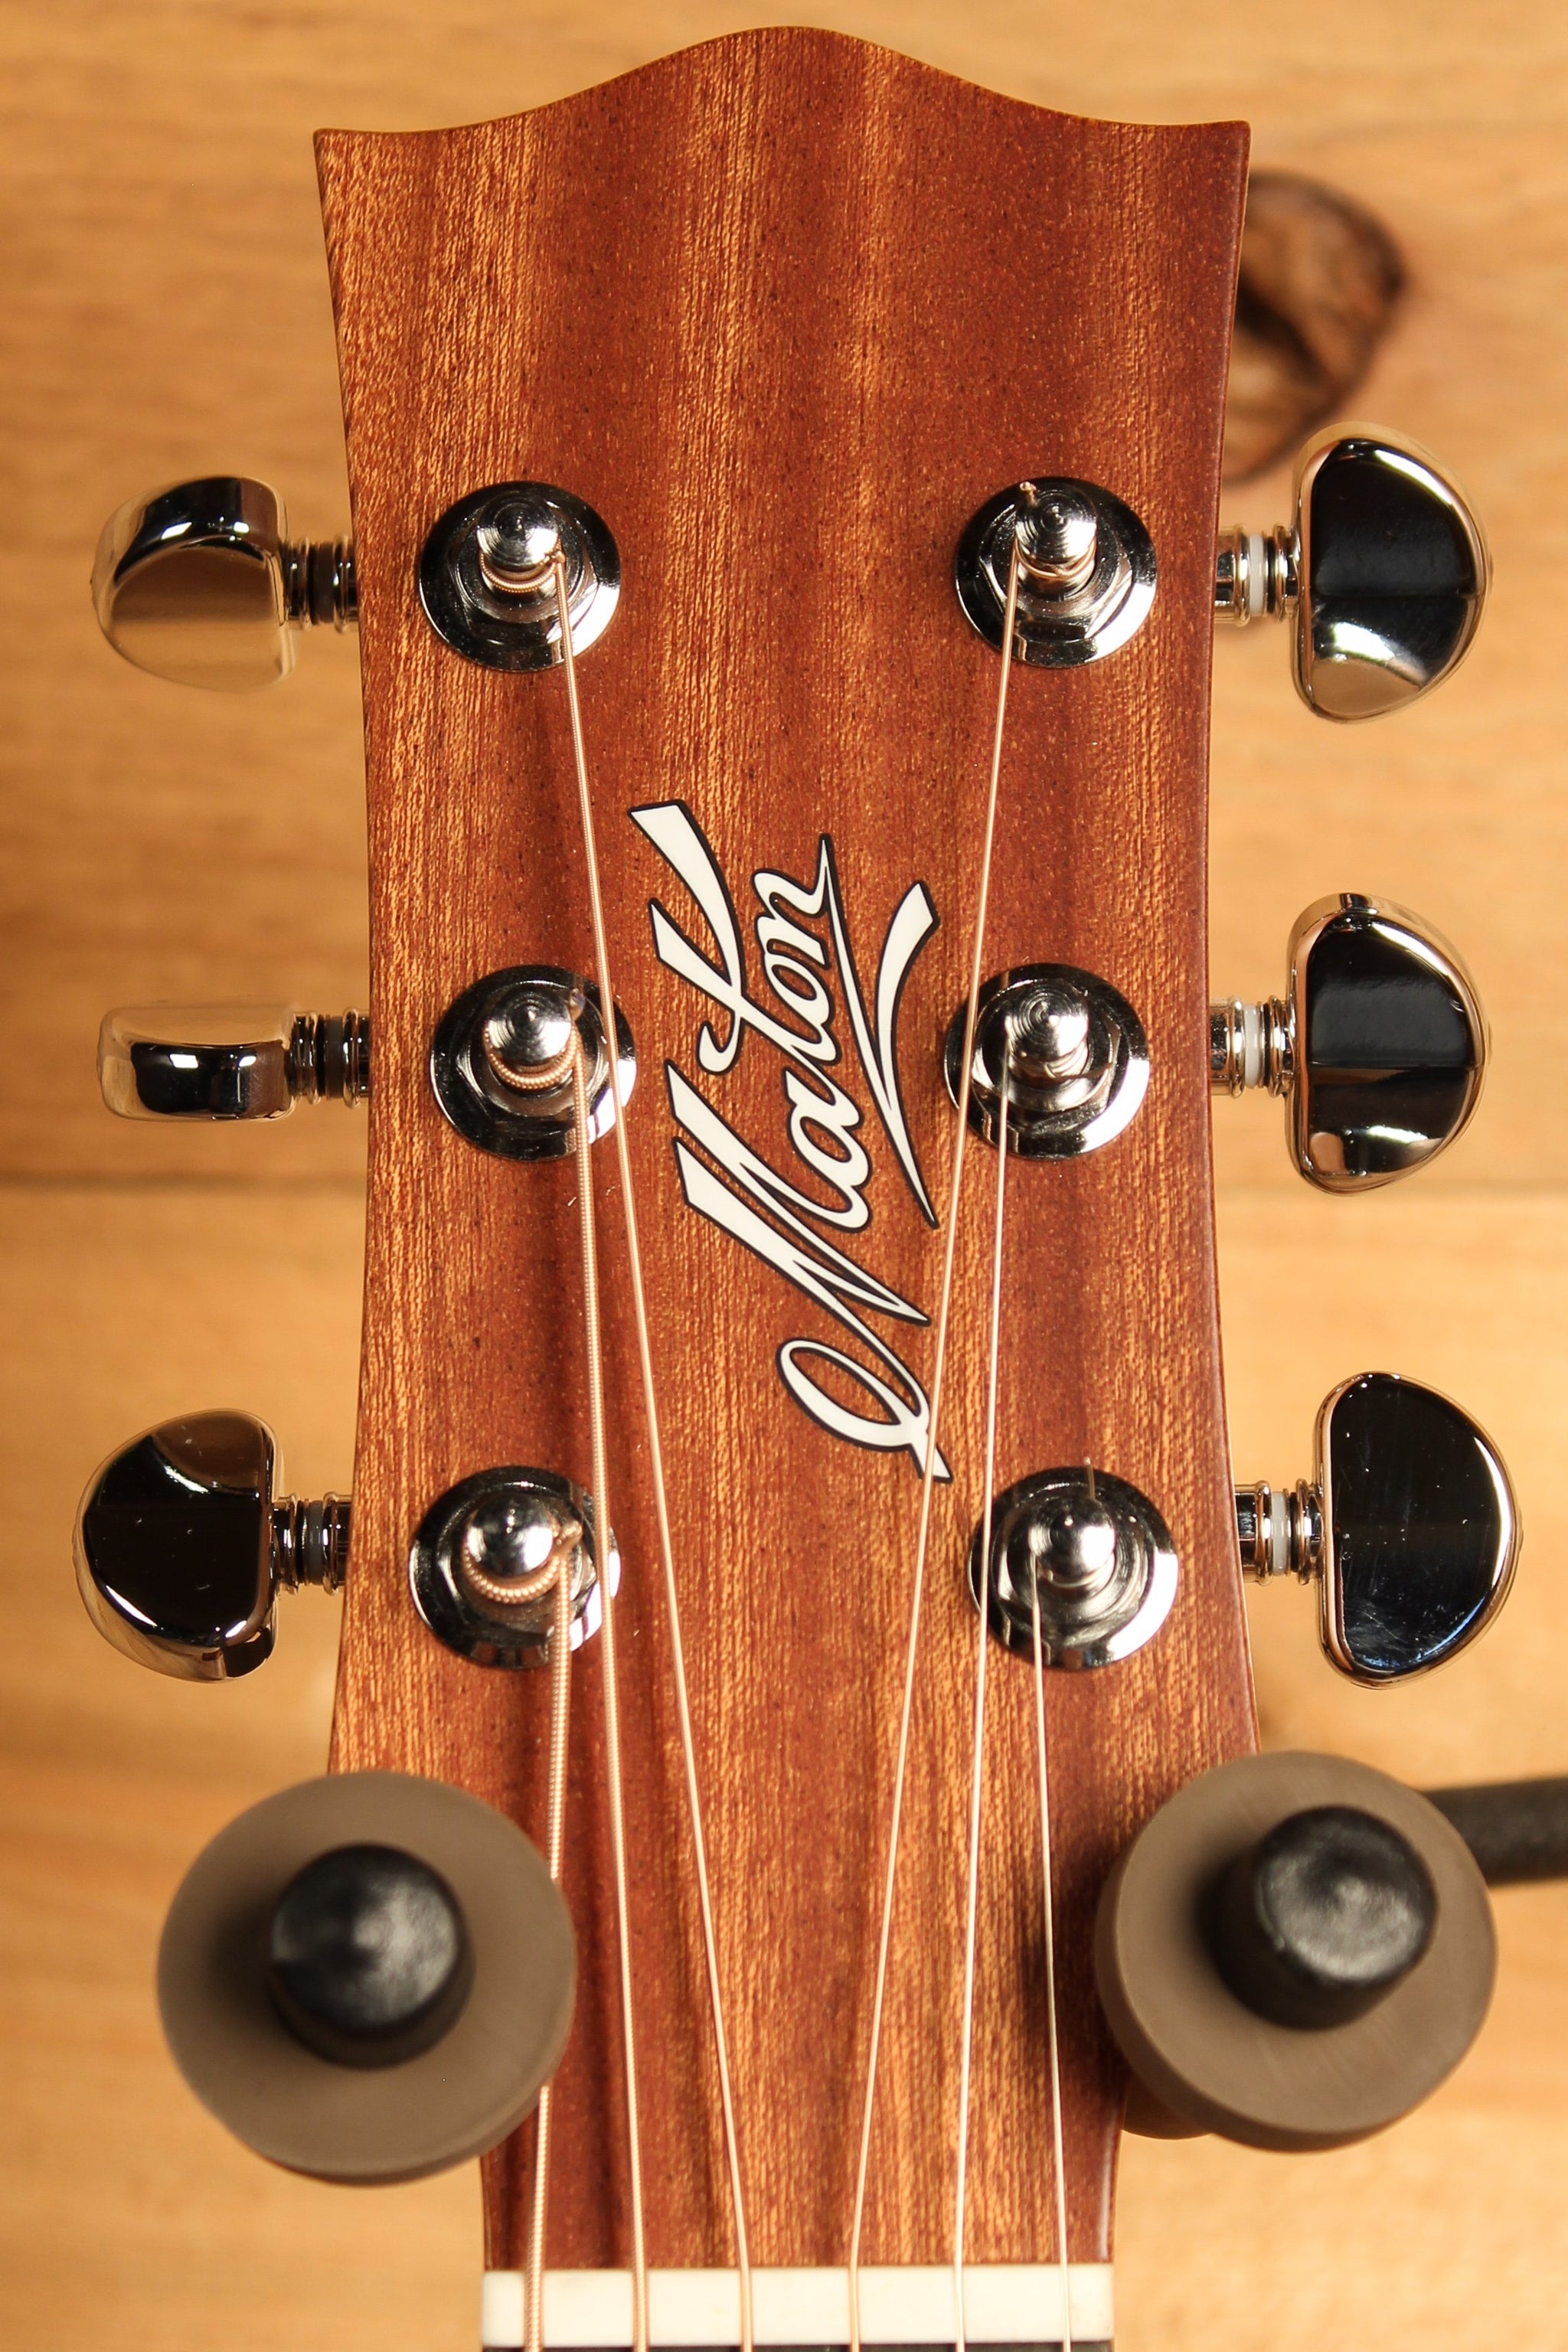 Maton SRS808 Guitar Western Red Cedar & Solid Blackwood ID-13697 - Artisan Guitars